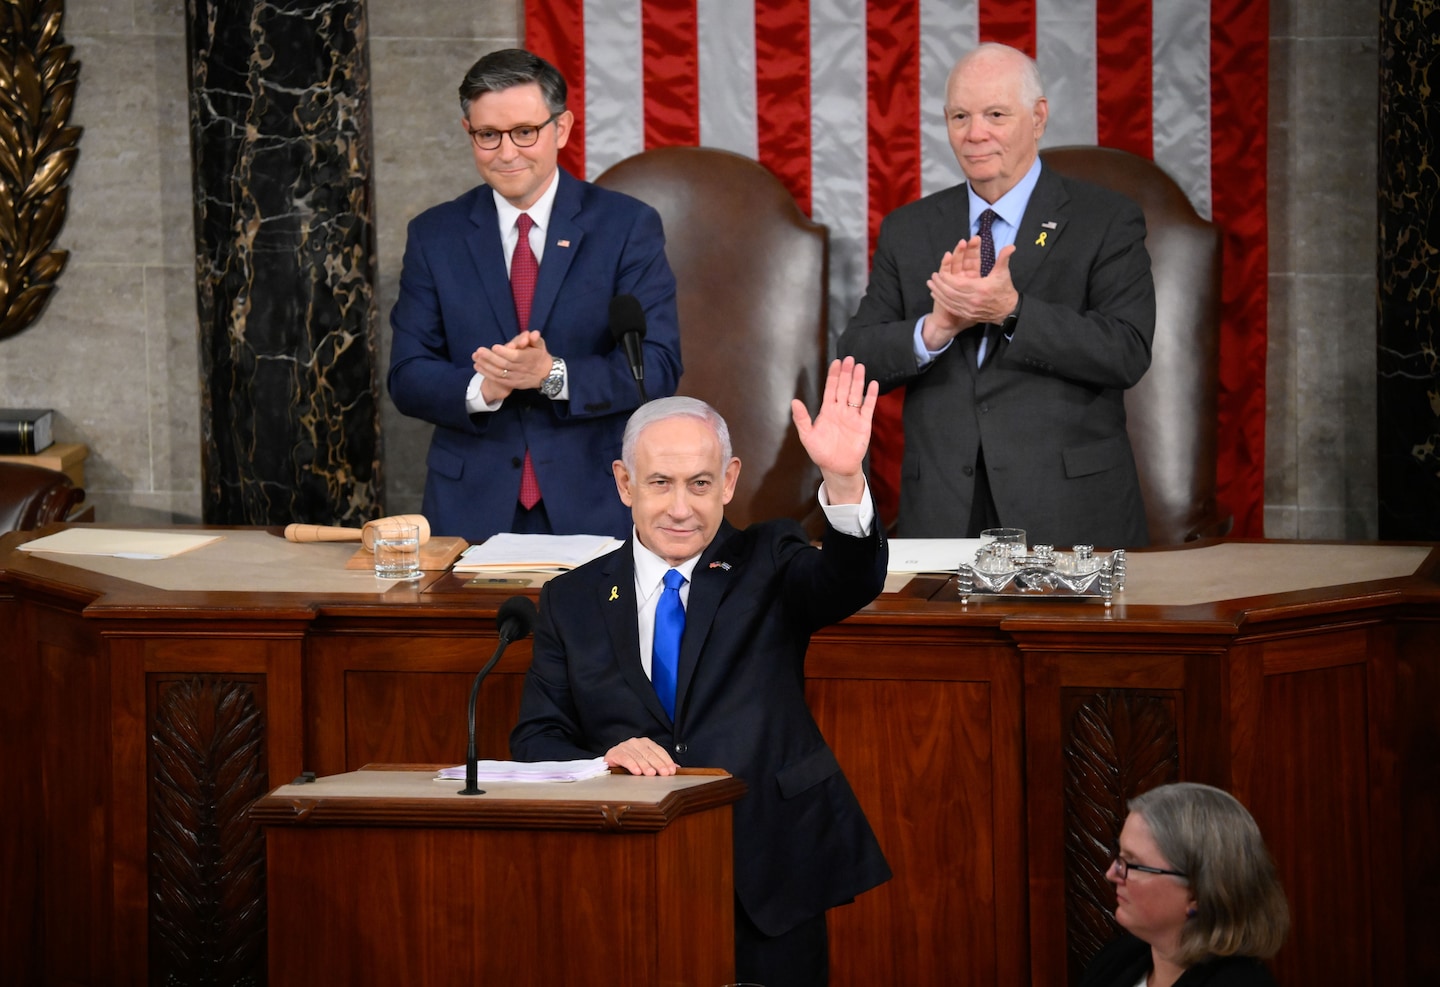 Netanyahu’s speech calls for U.S., Israel to ‘stand together’ amid Gaza war